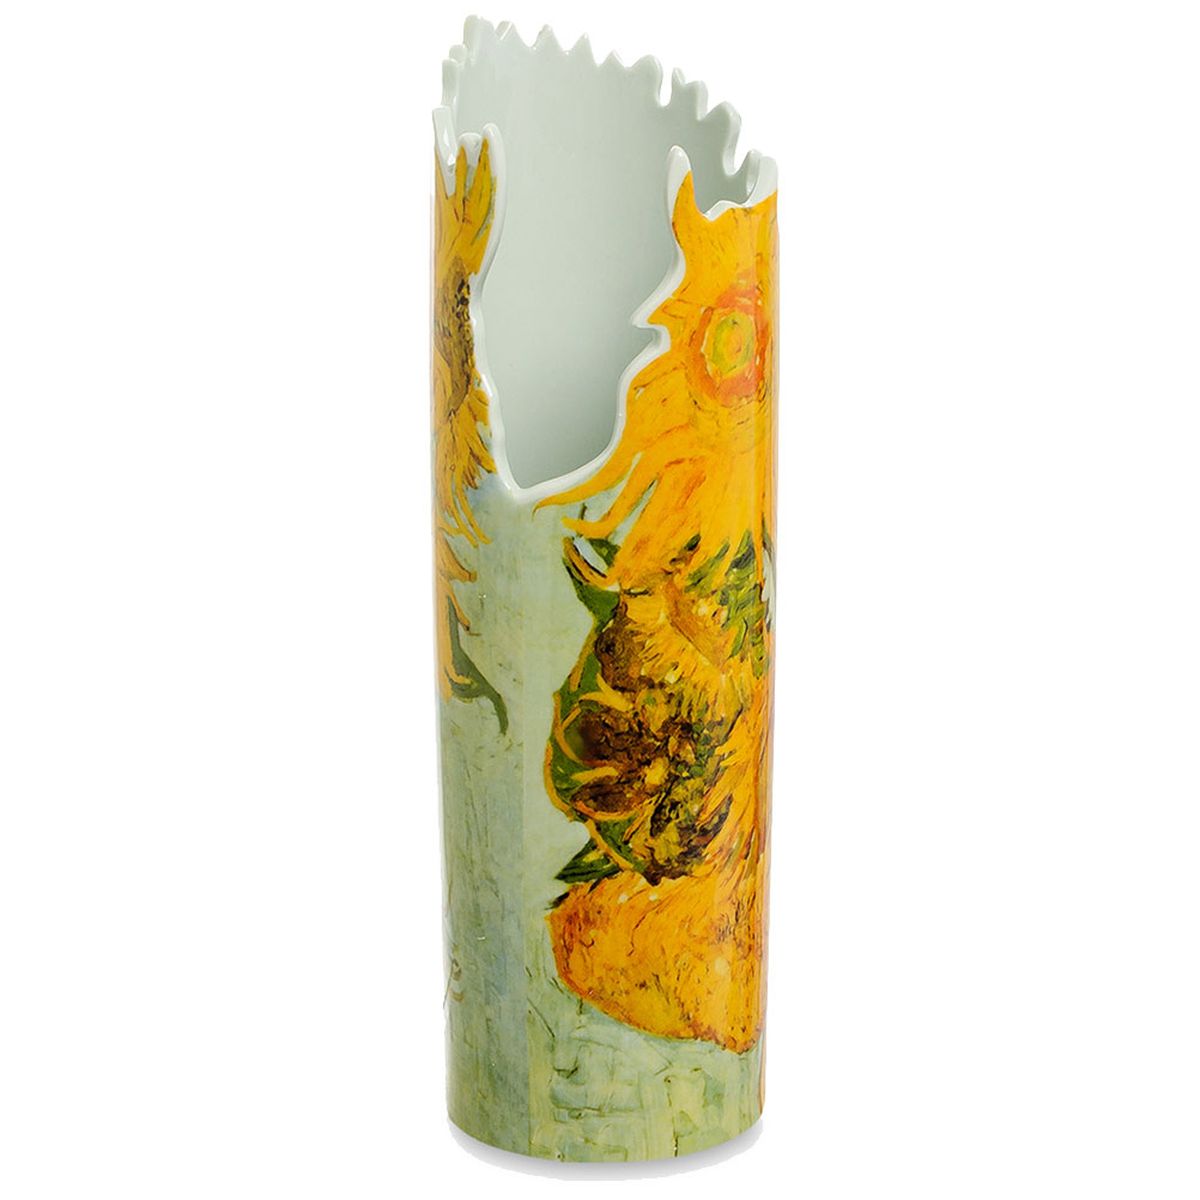 Vase en cramique silhouette Van Gogh - Tournesols